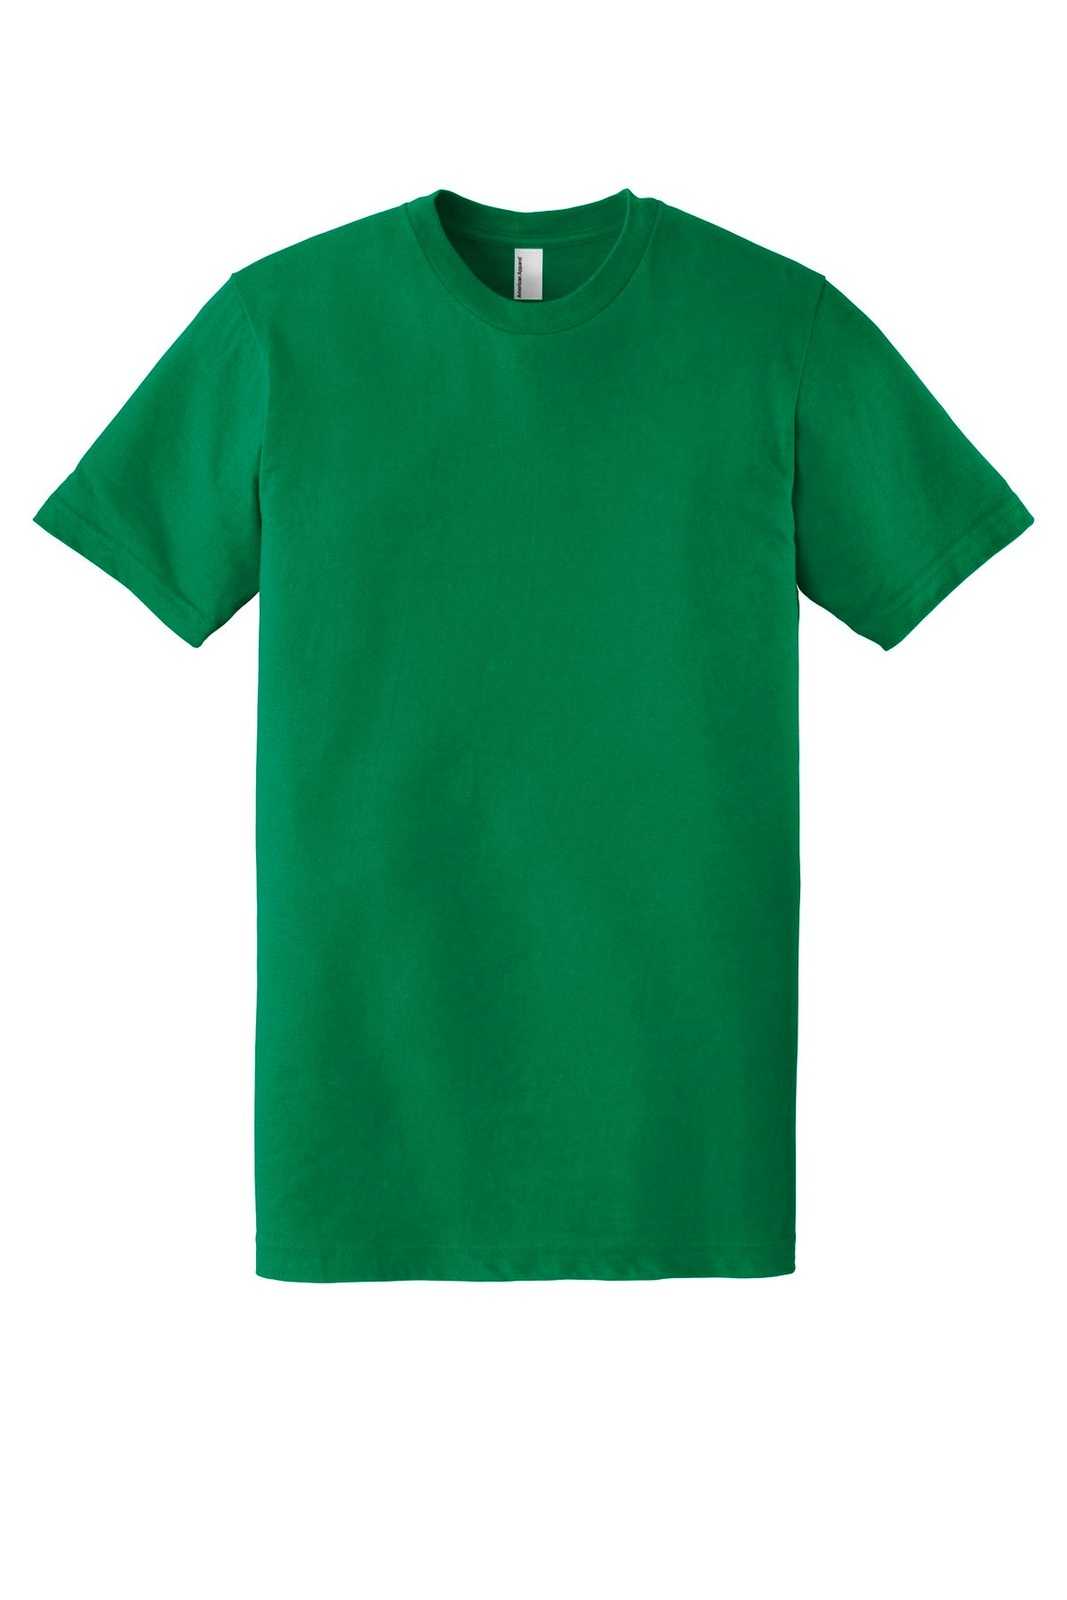 American Apparel 2001W Fine Jersey T-Shirt - Kelly Green - HIT a Double